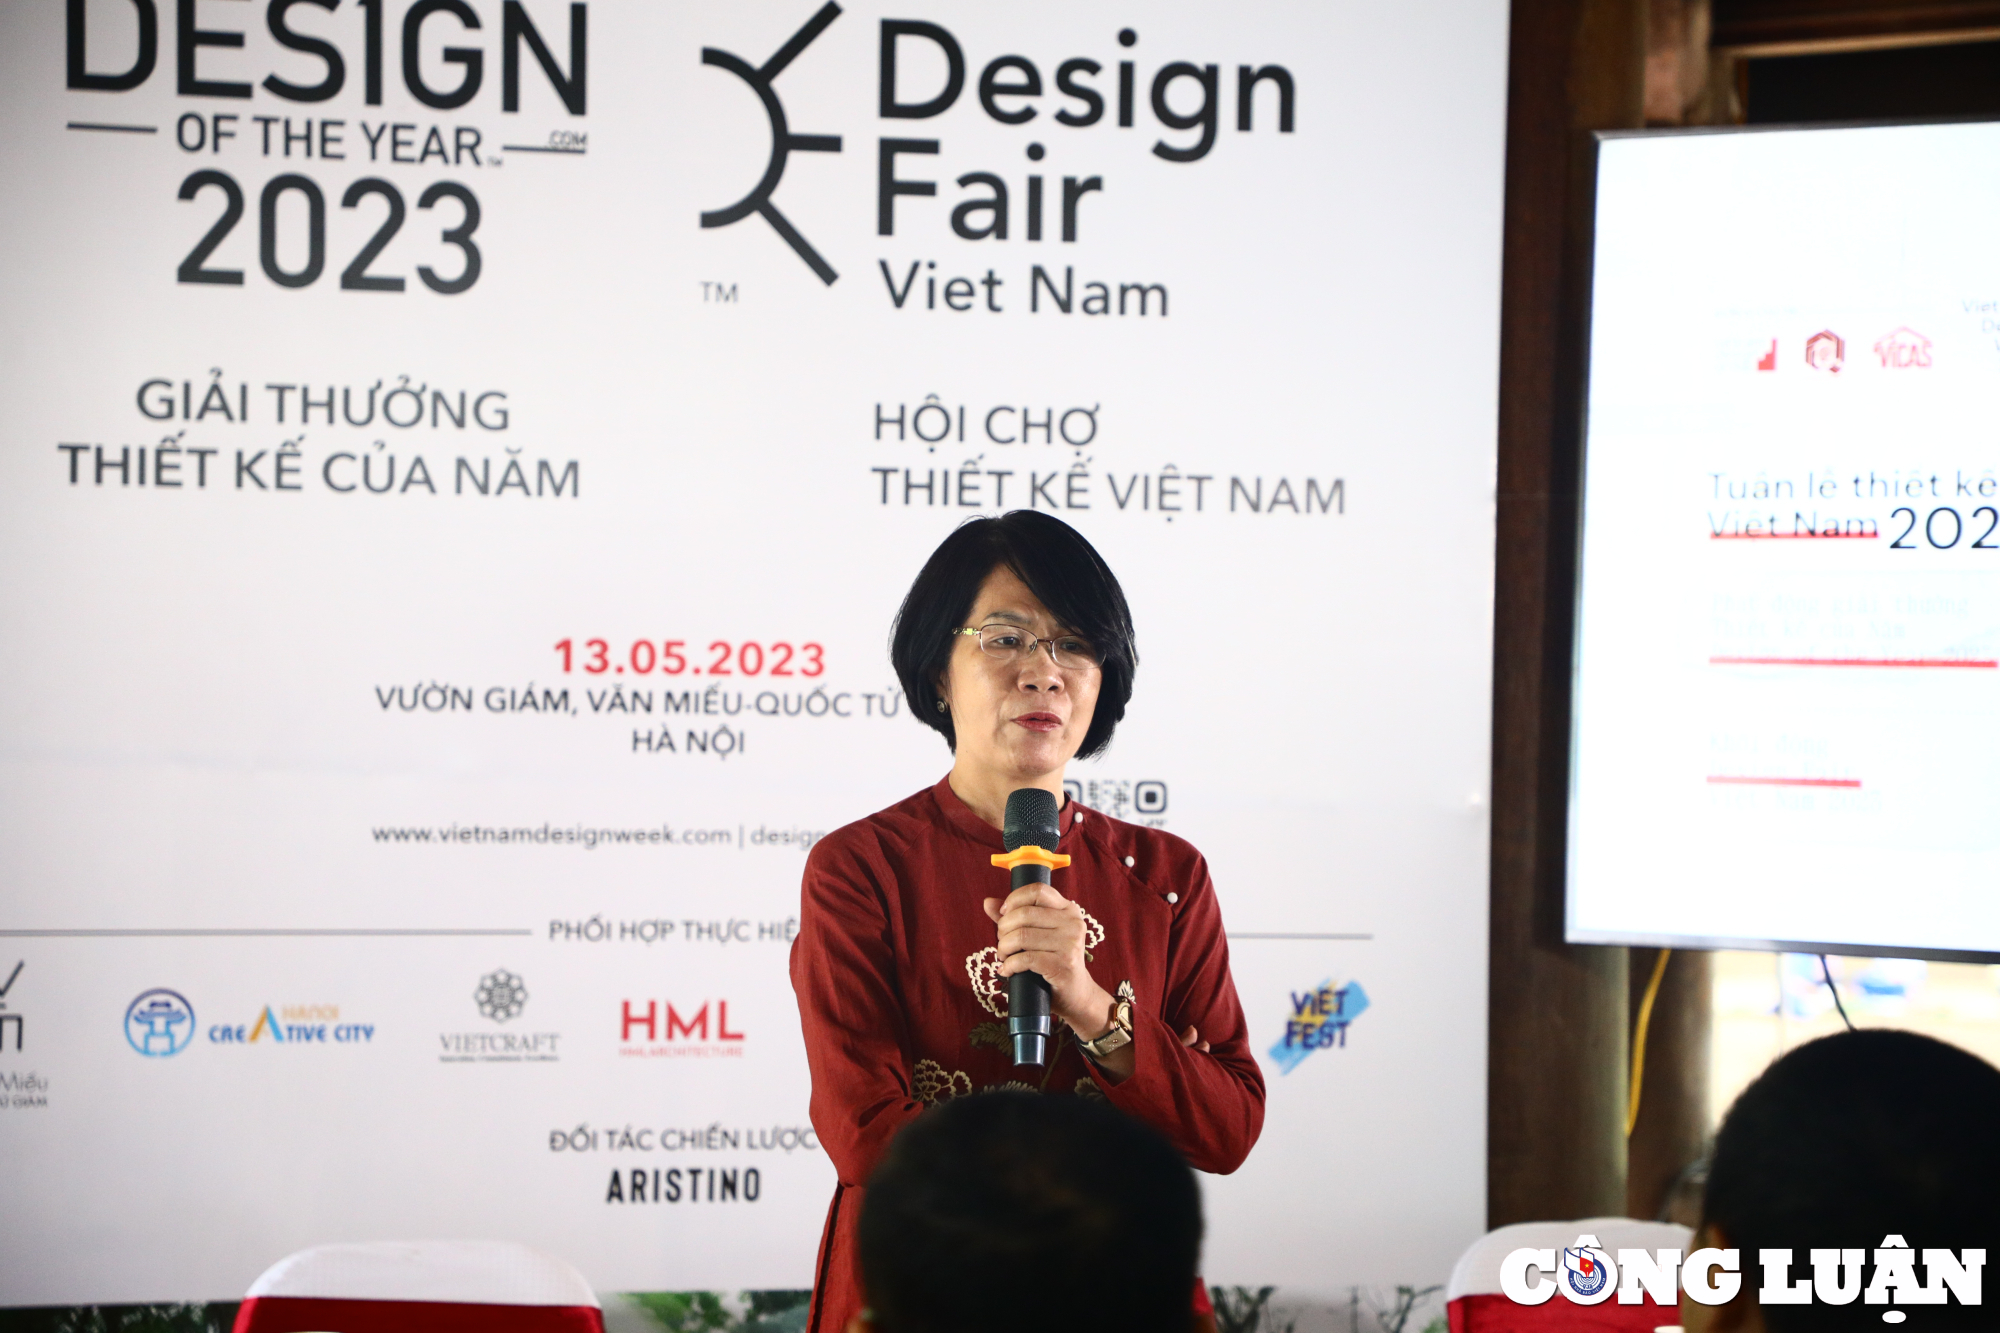 khoi dong giai thuong thiet ke nam  design of the year 2023 hinh 1